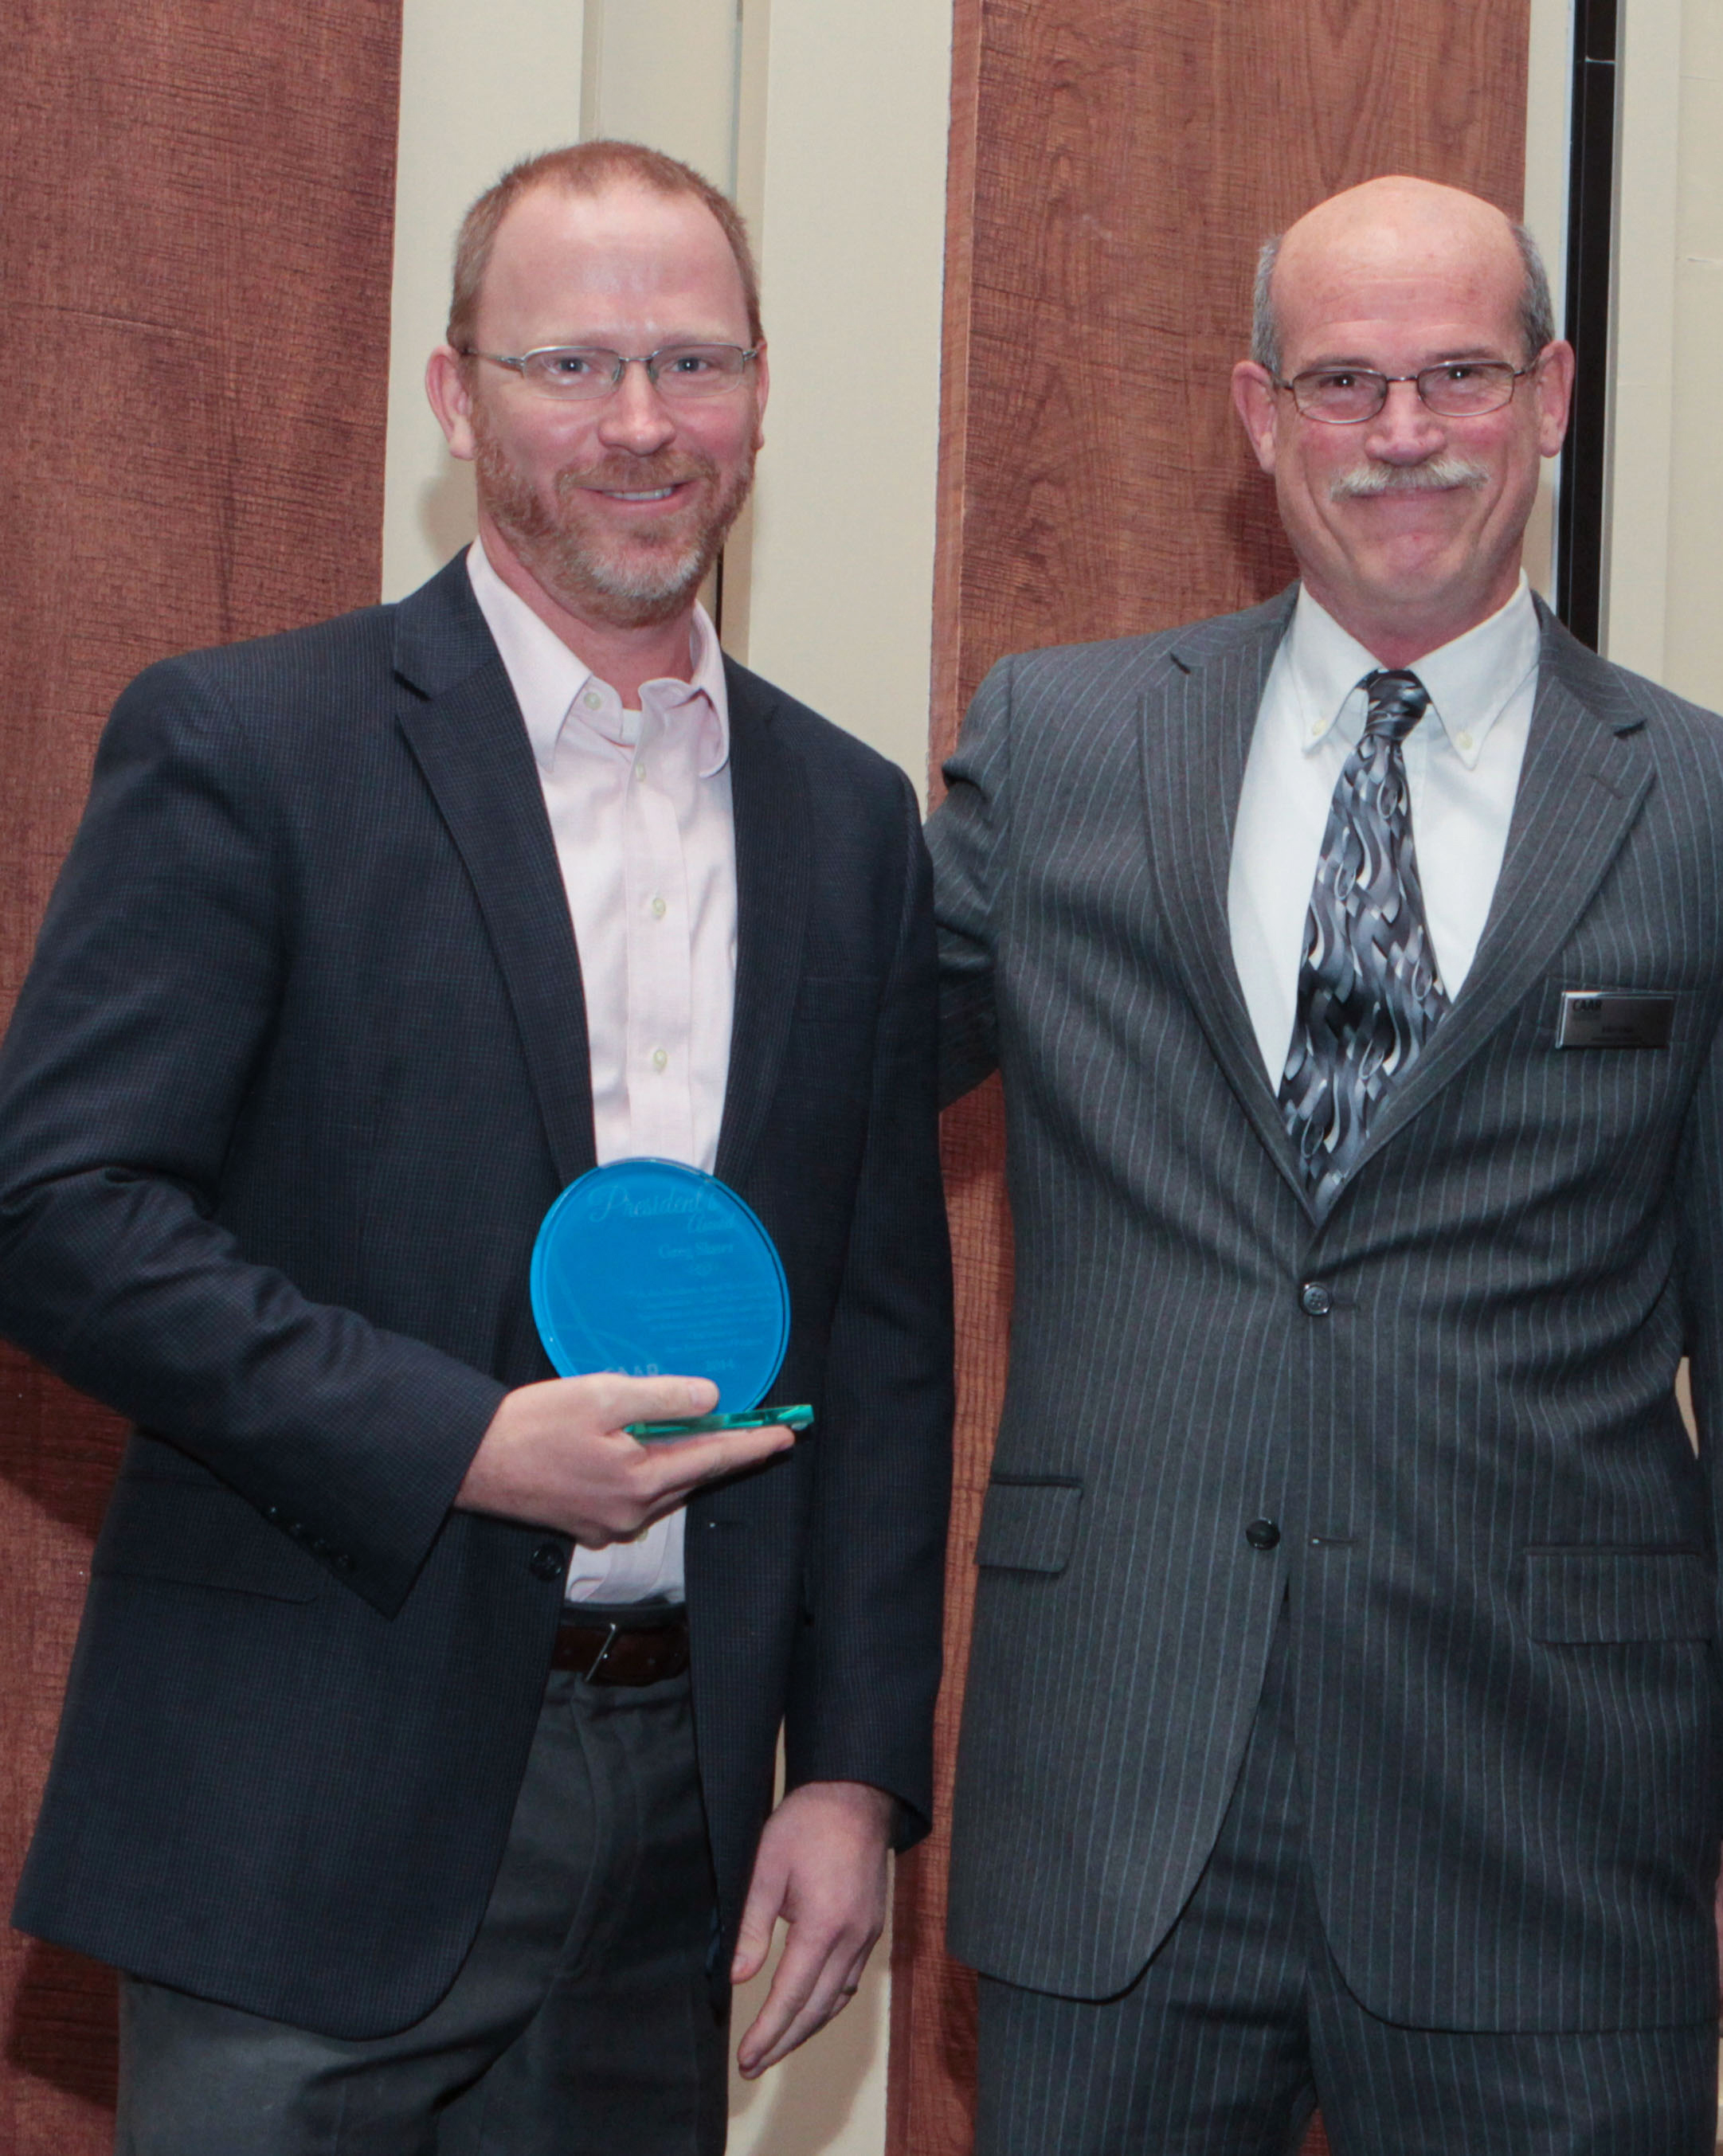 Greg Slater accepts the 2014 President’s Award from President, John Ince